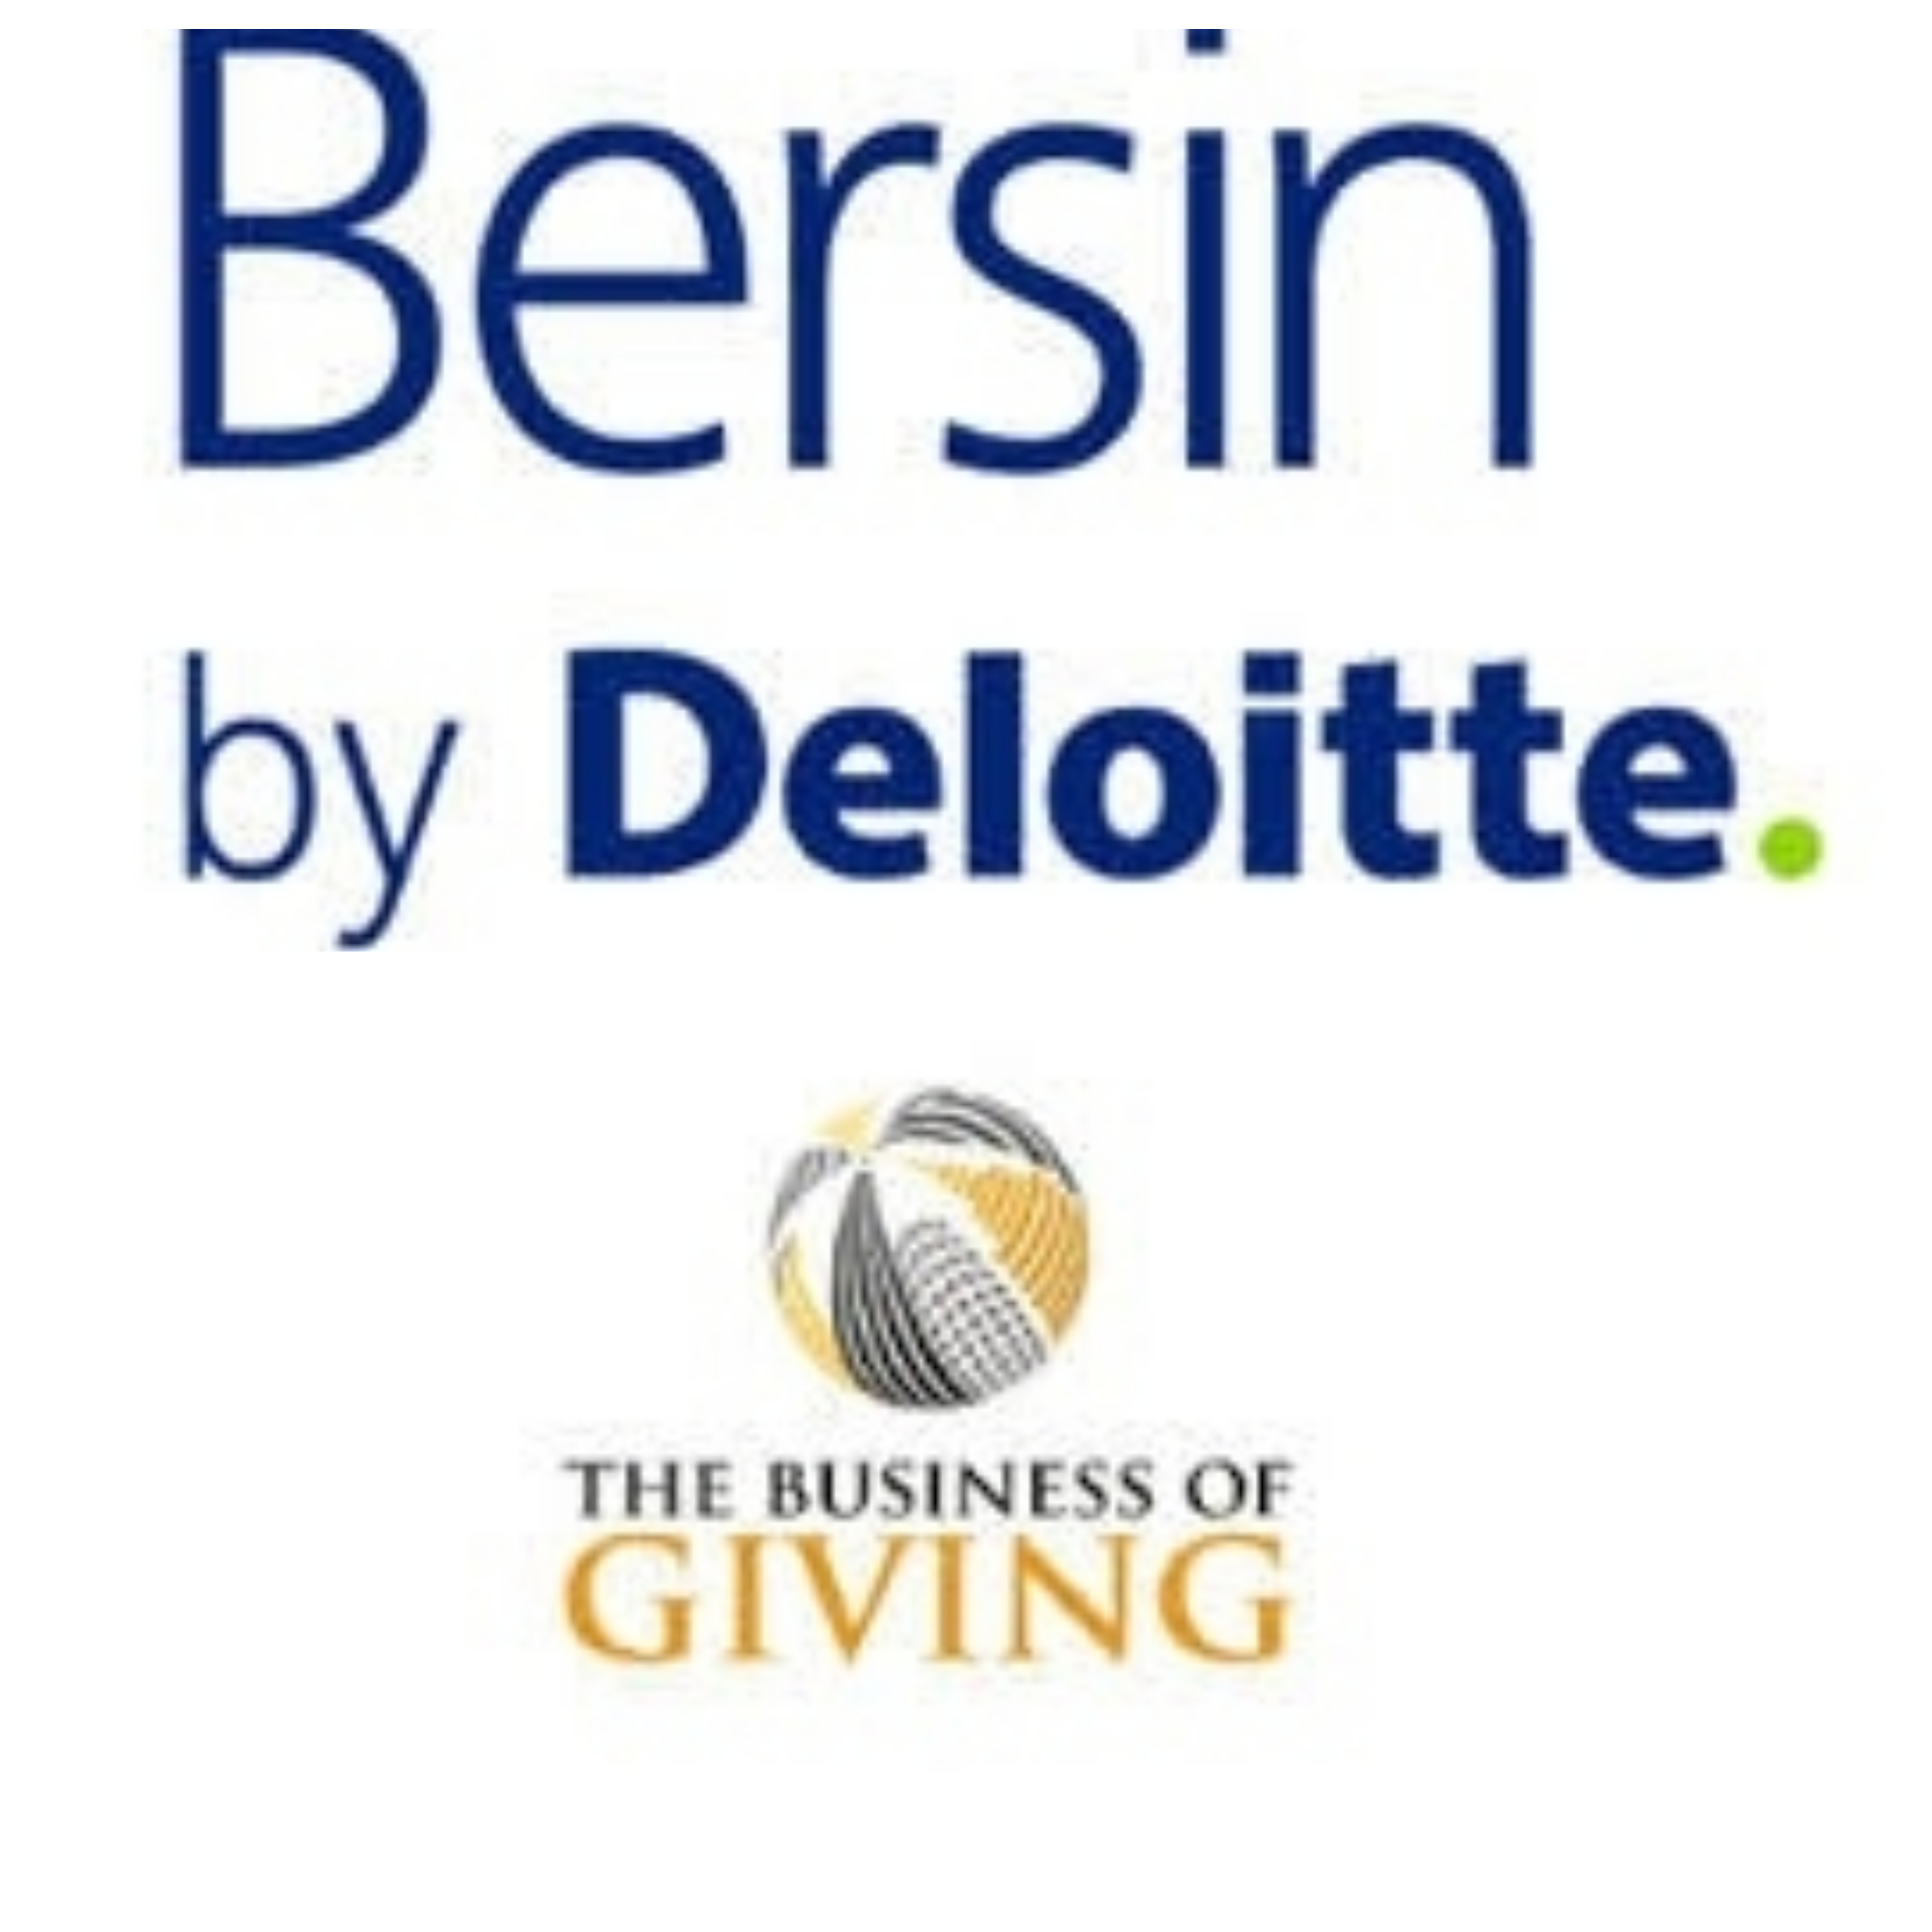 Josh Bersin, Founder and Principal of Bersin Deloitte